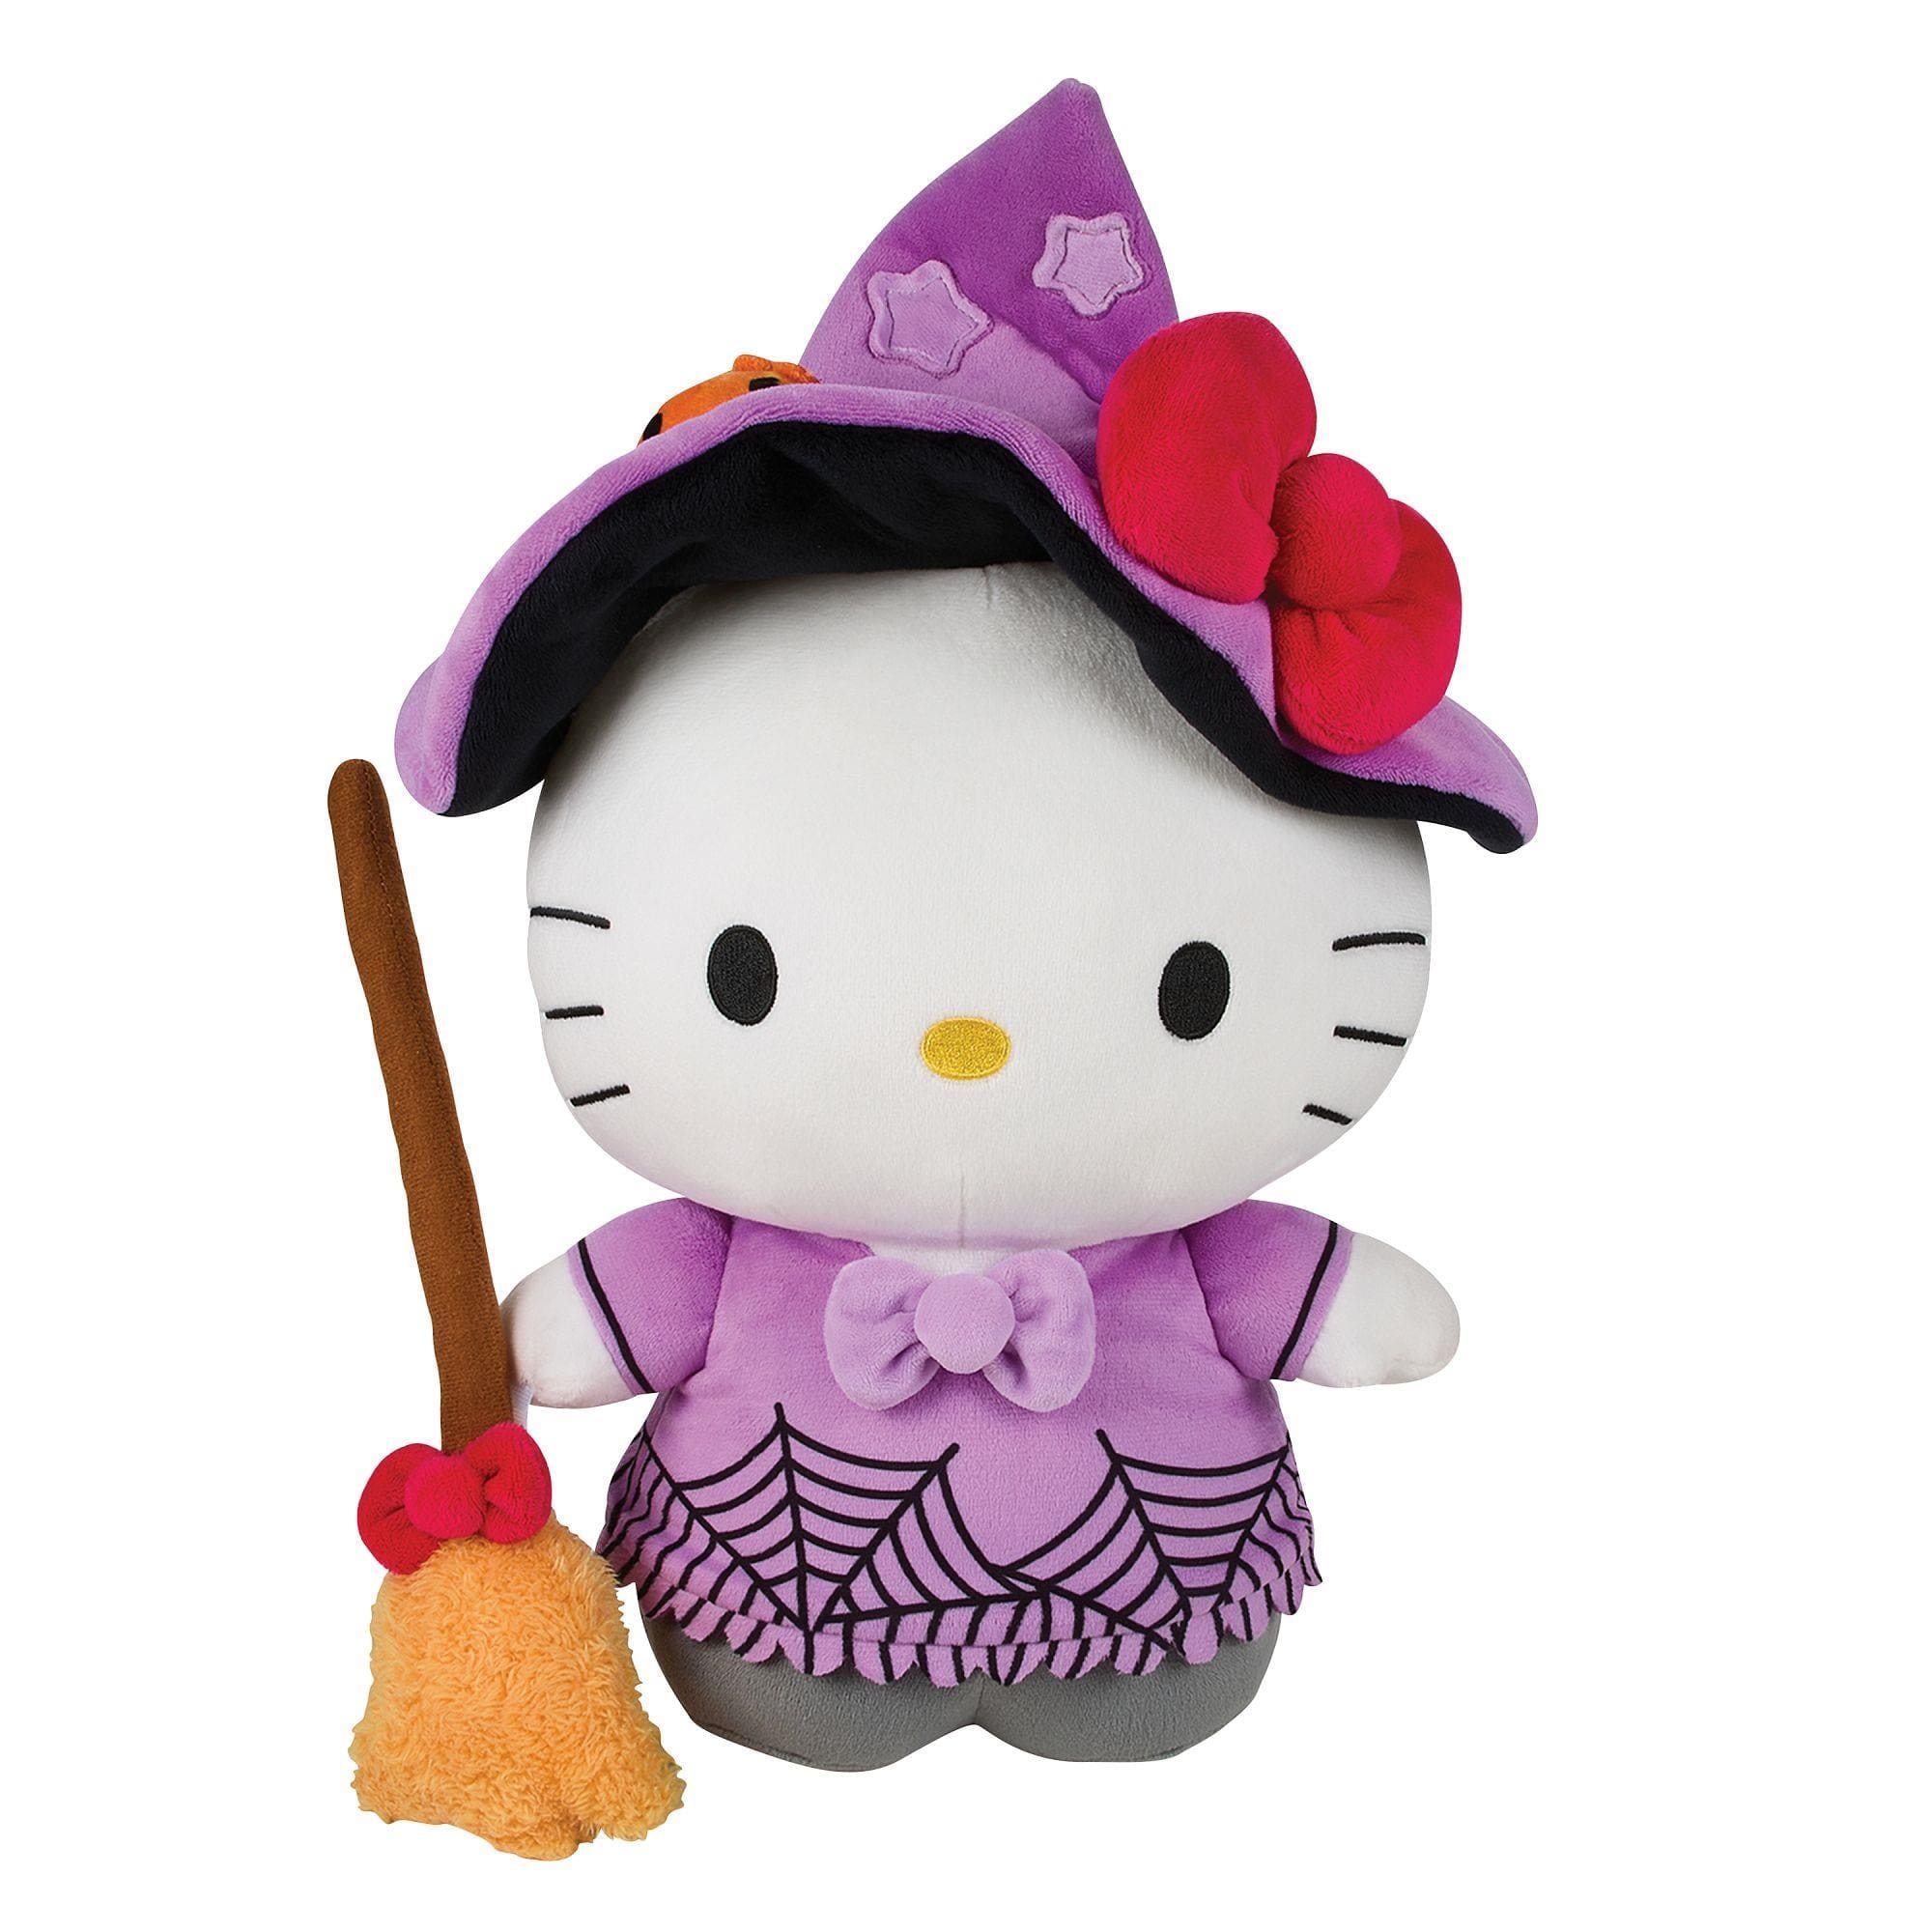 Enesco Hello Kitty 13" Halloween Plush Plushies: Witch, Candy Corn, Pumpkin! Witch Kawaii Gifts